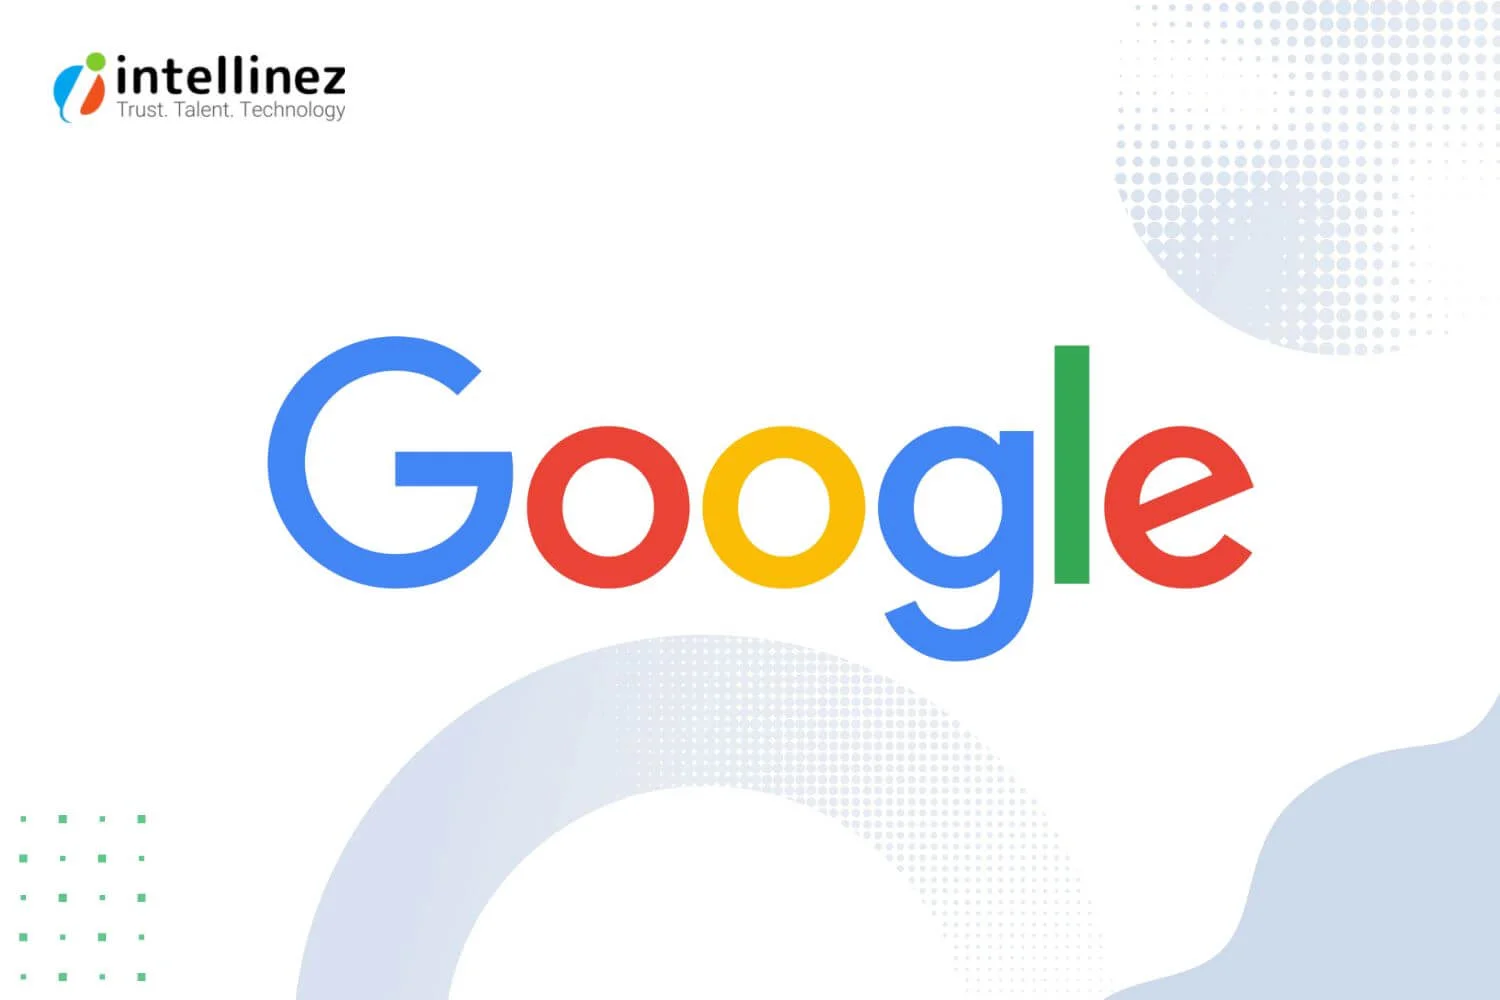 Google's Leadership Development